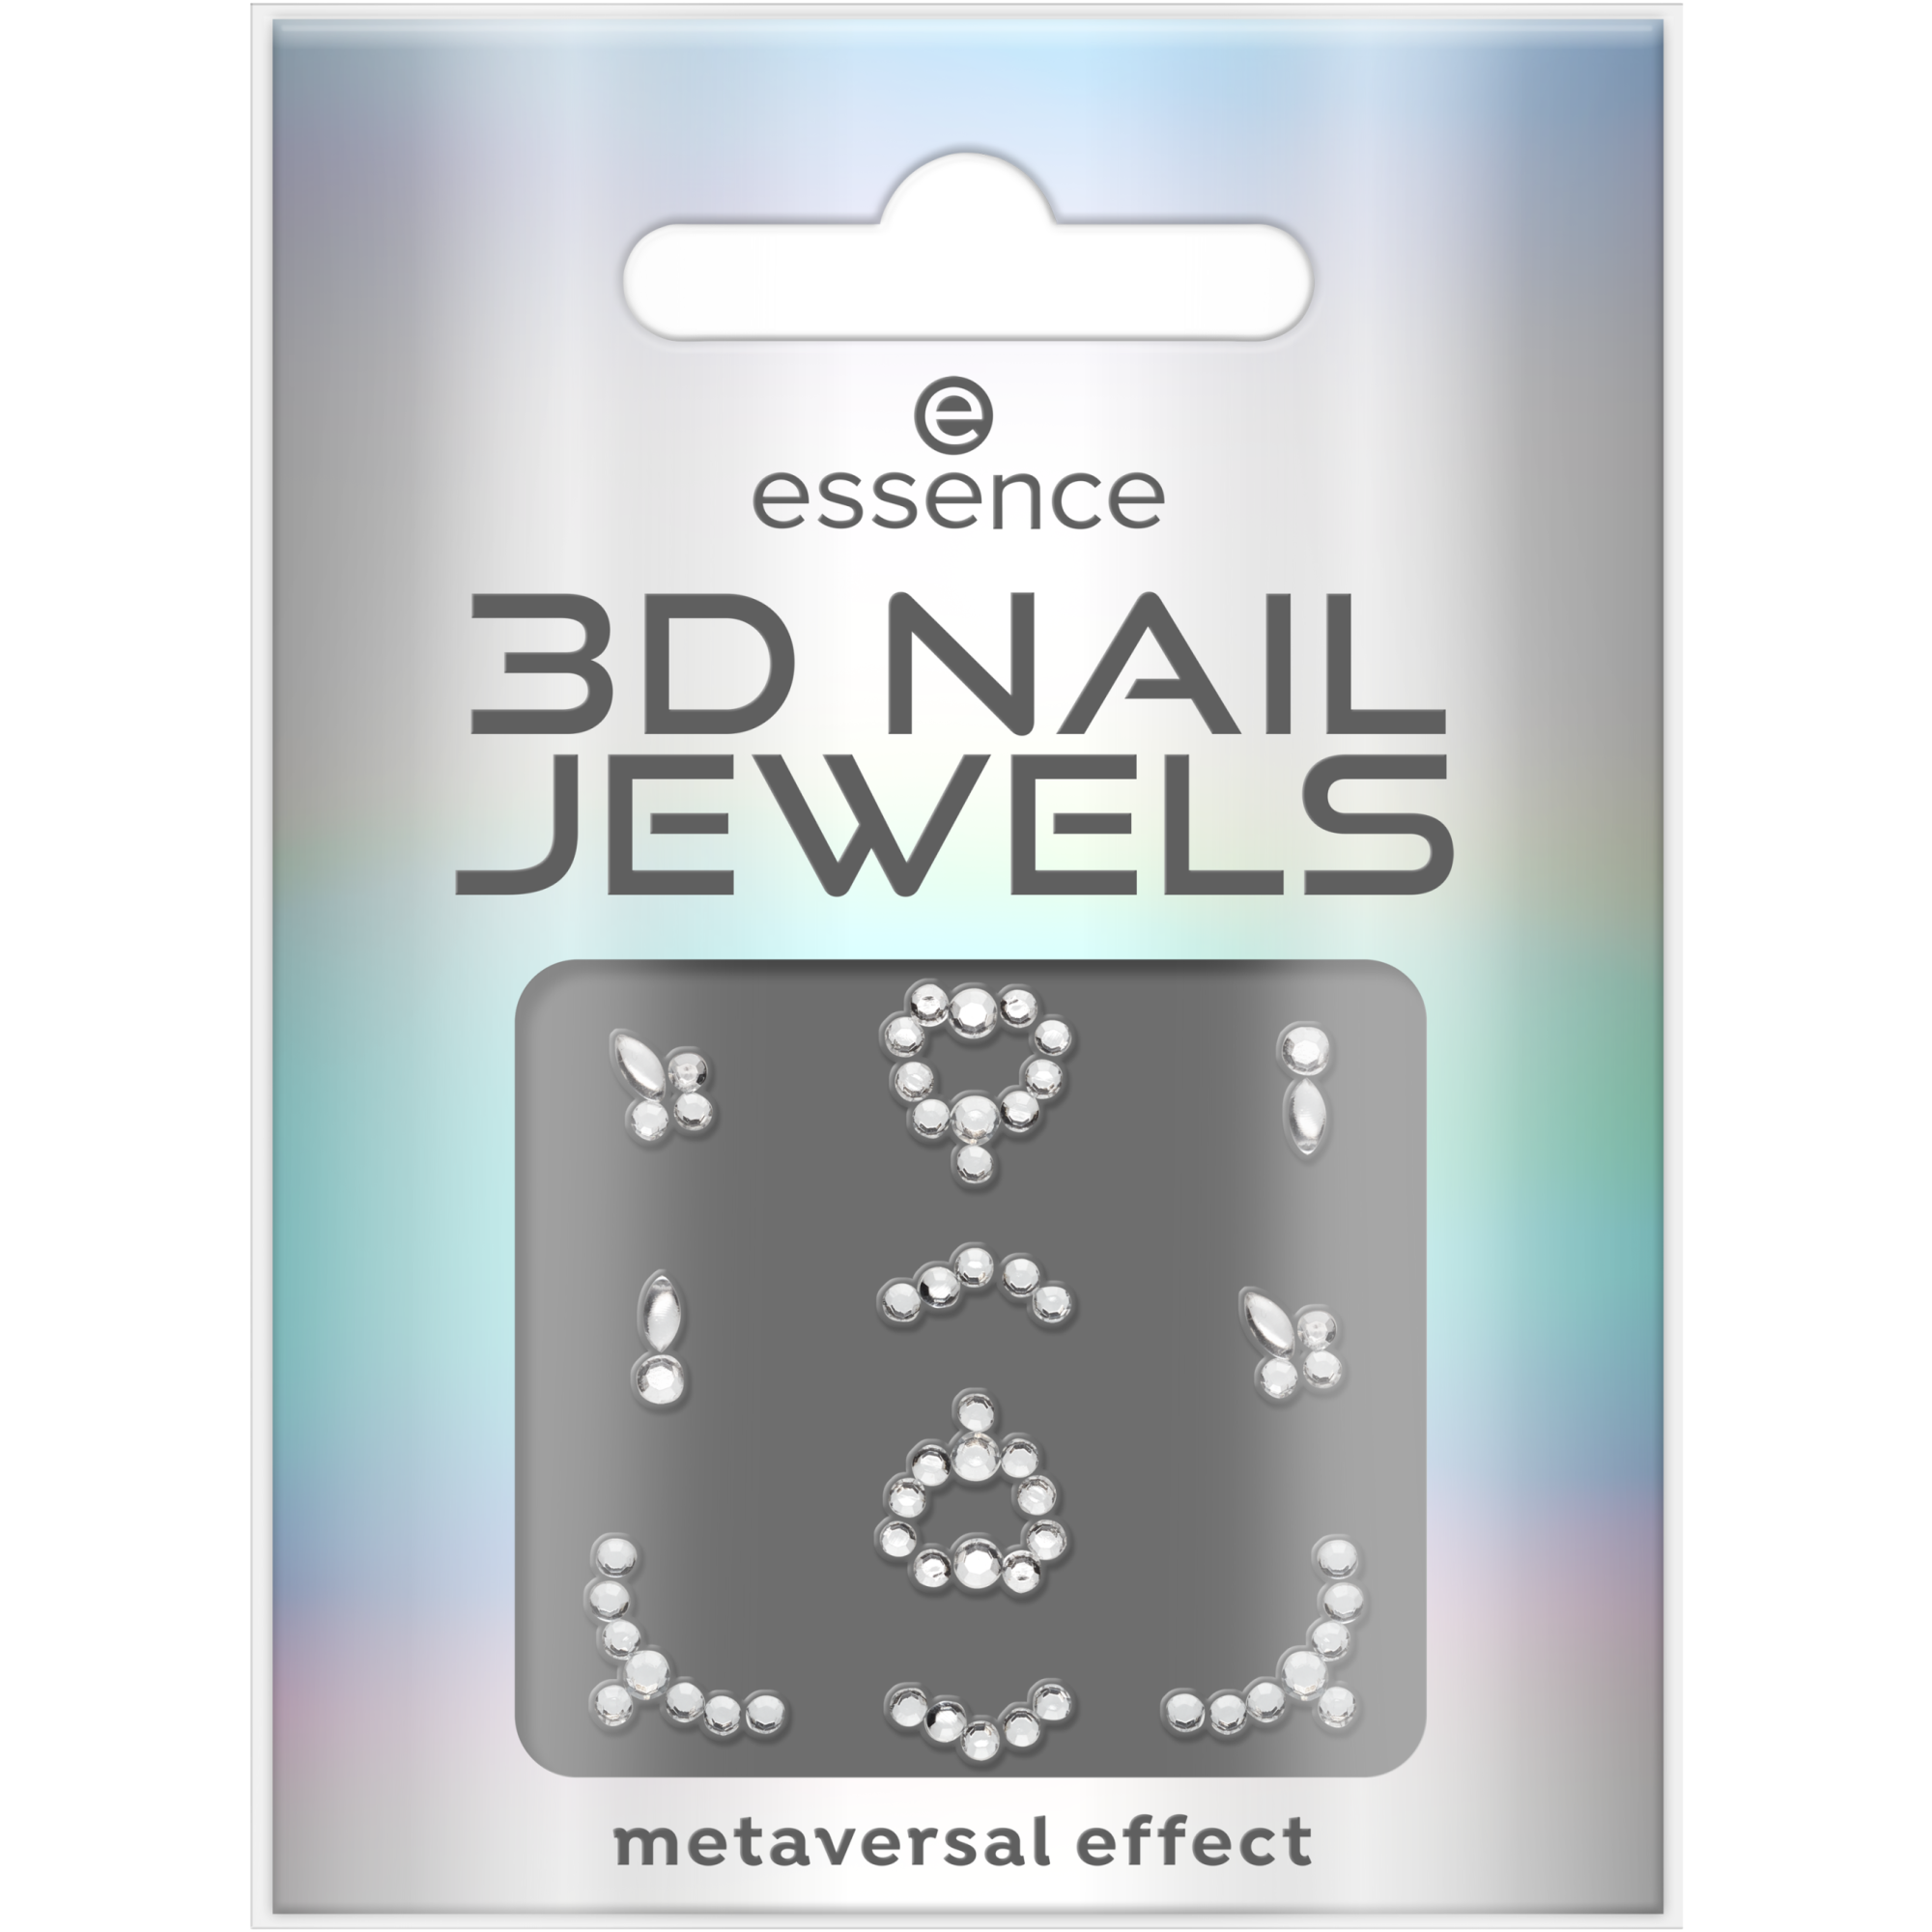 3D NAIL JEWELS bijoux ongles 3D